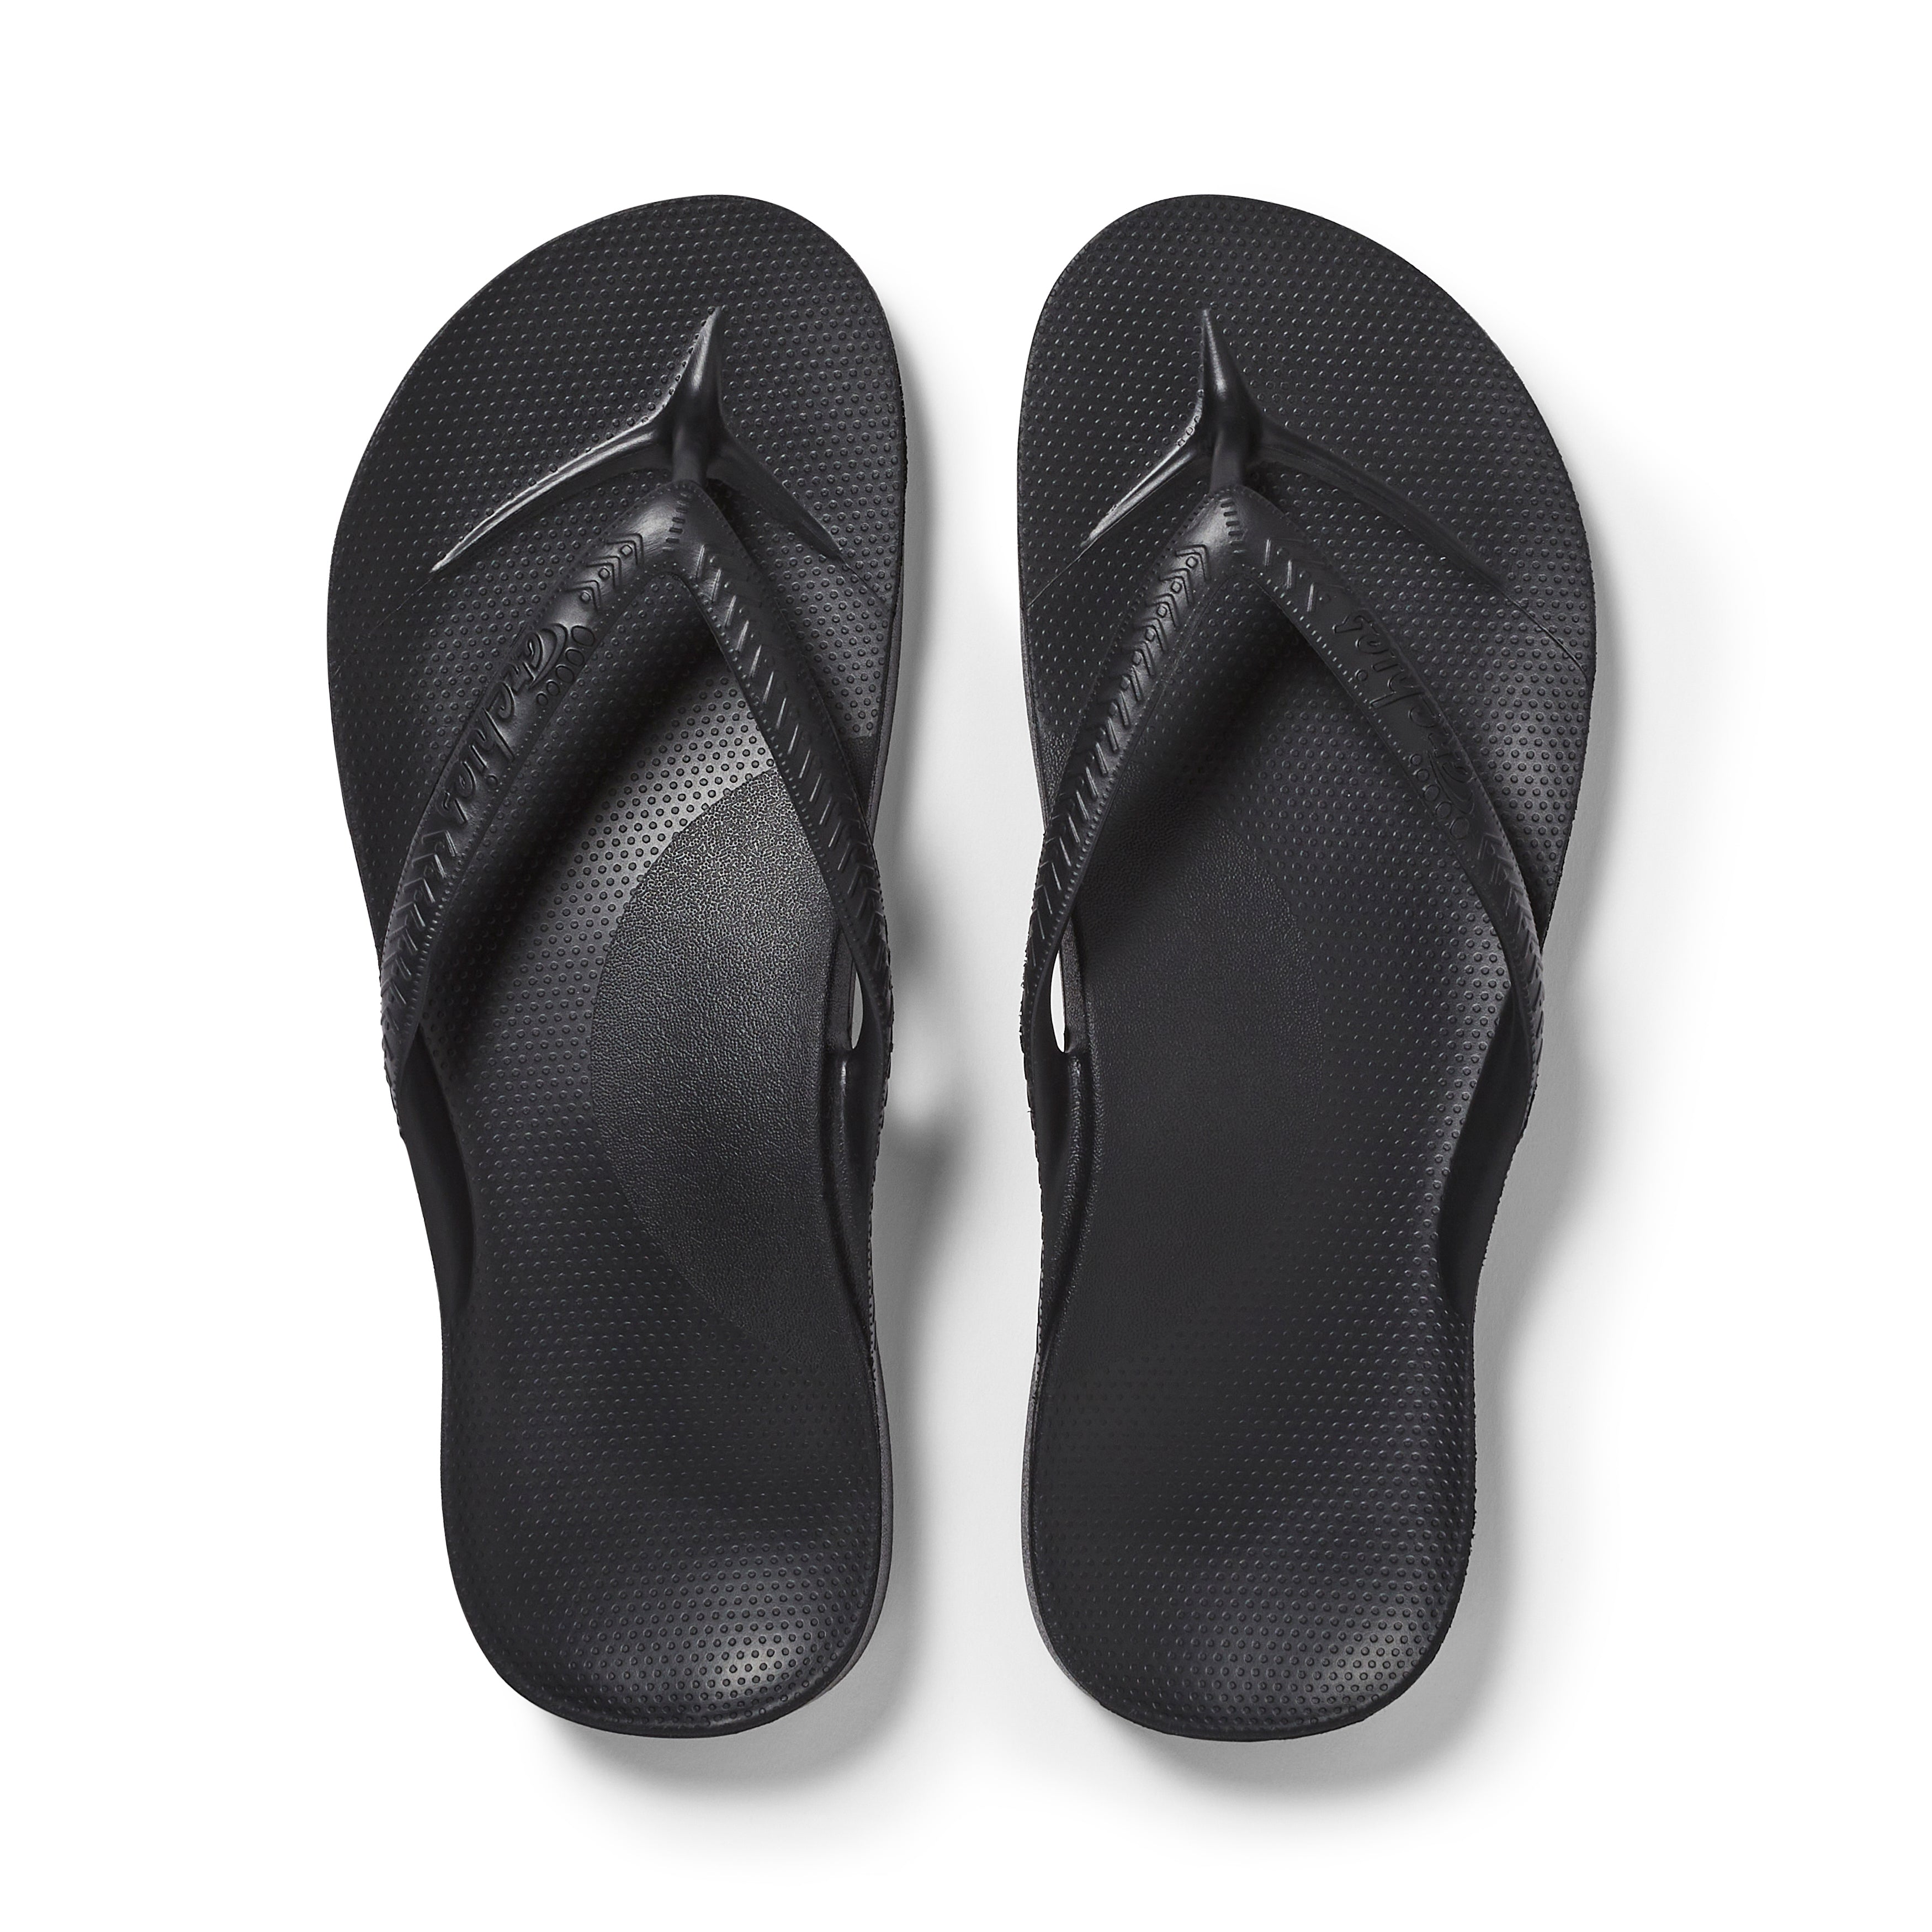 Zwart - Slippers met steunzool – Archies Footwear Pty Ltd.